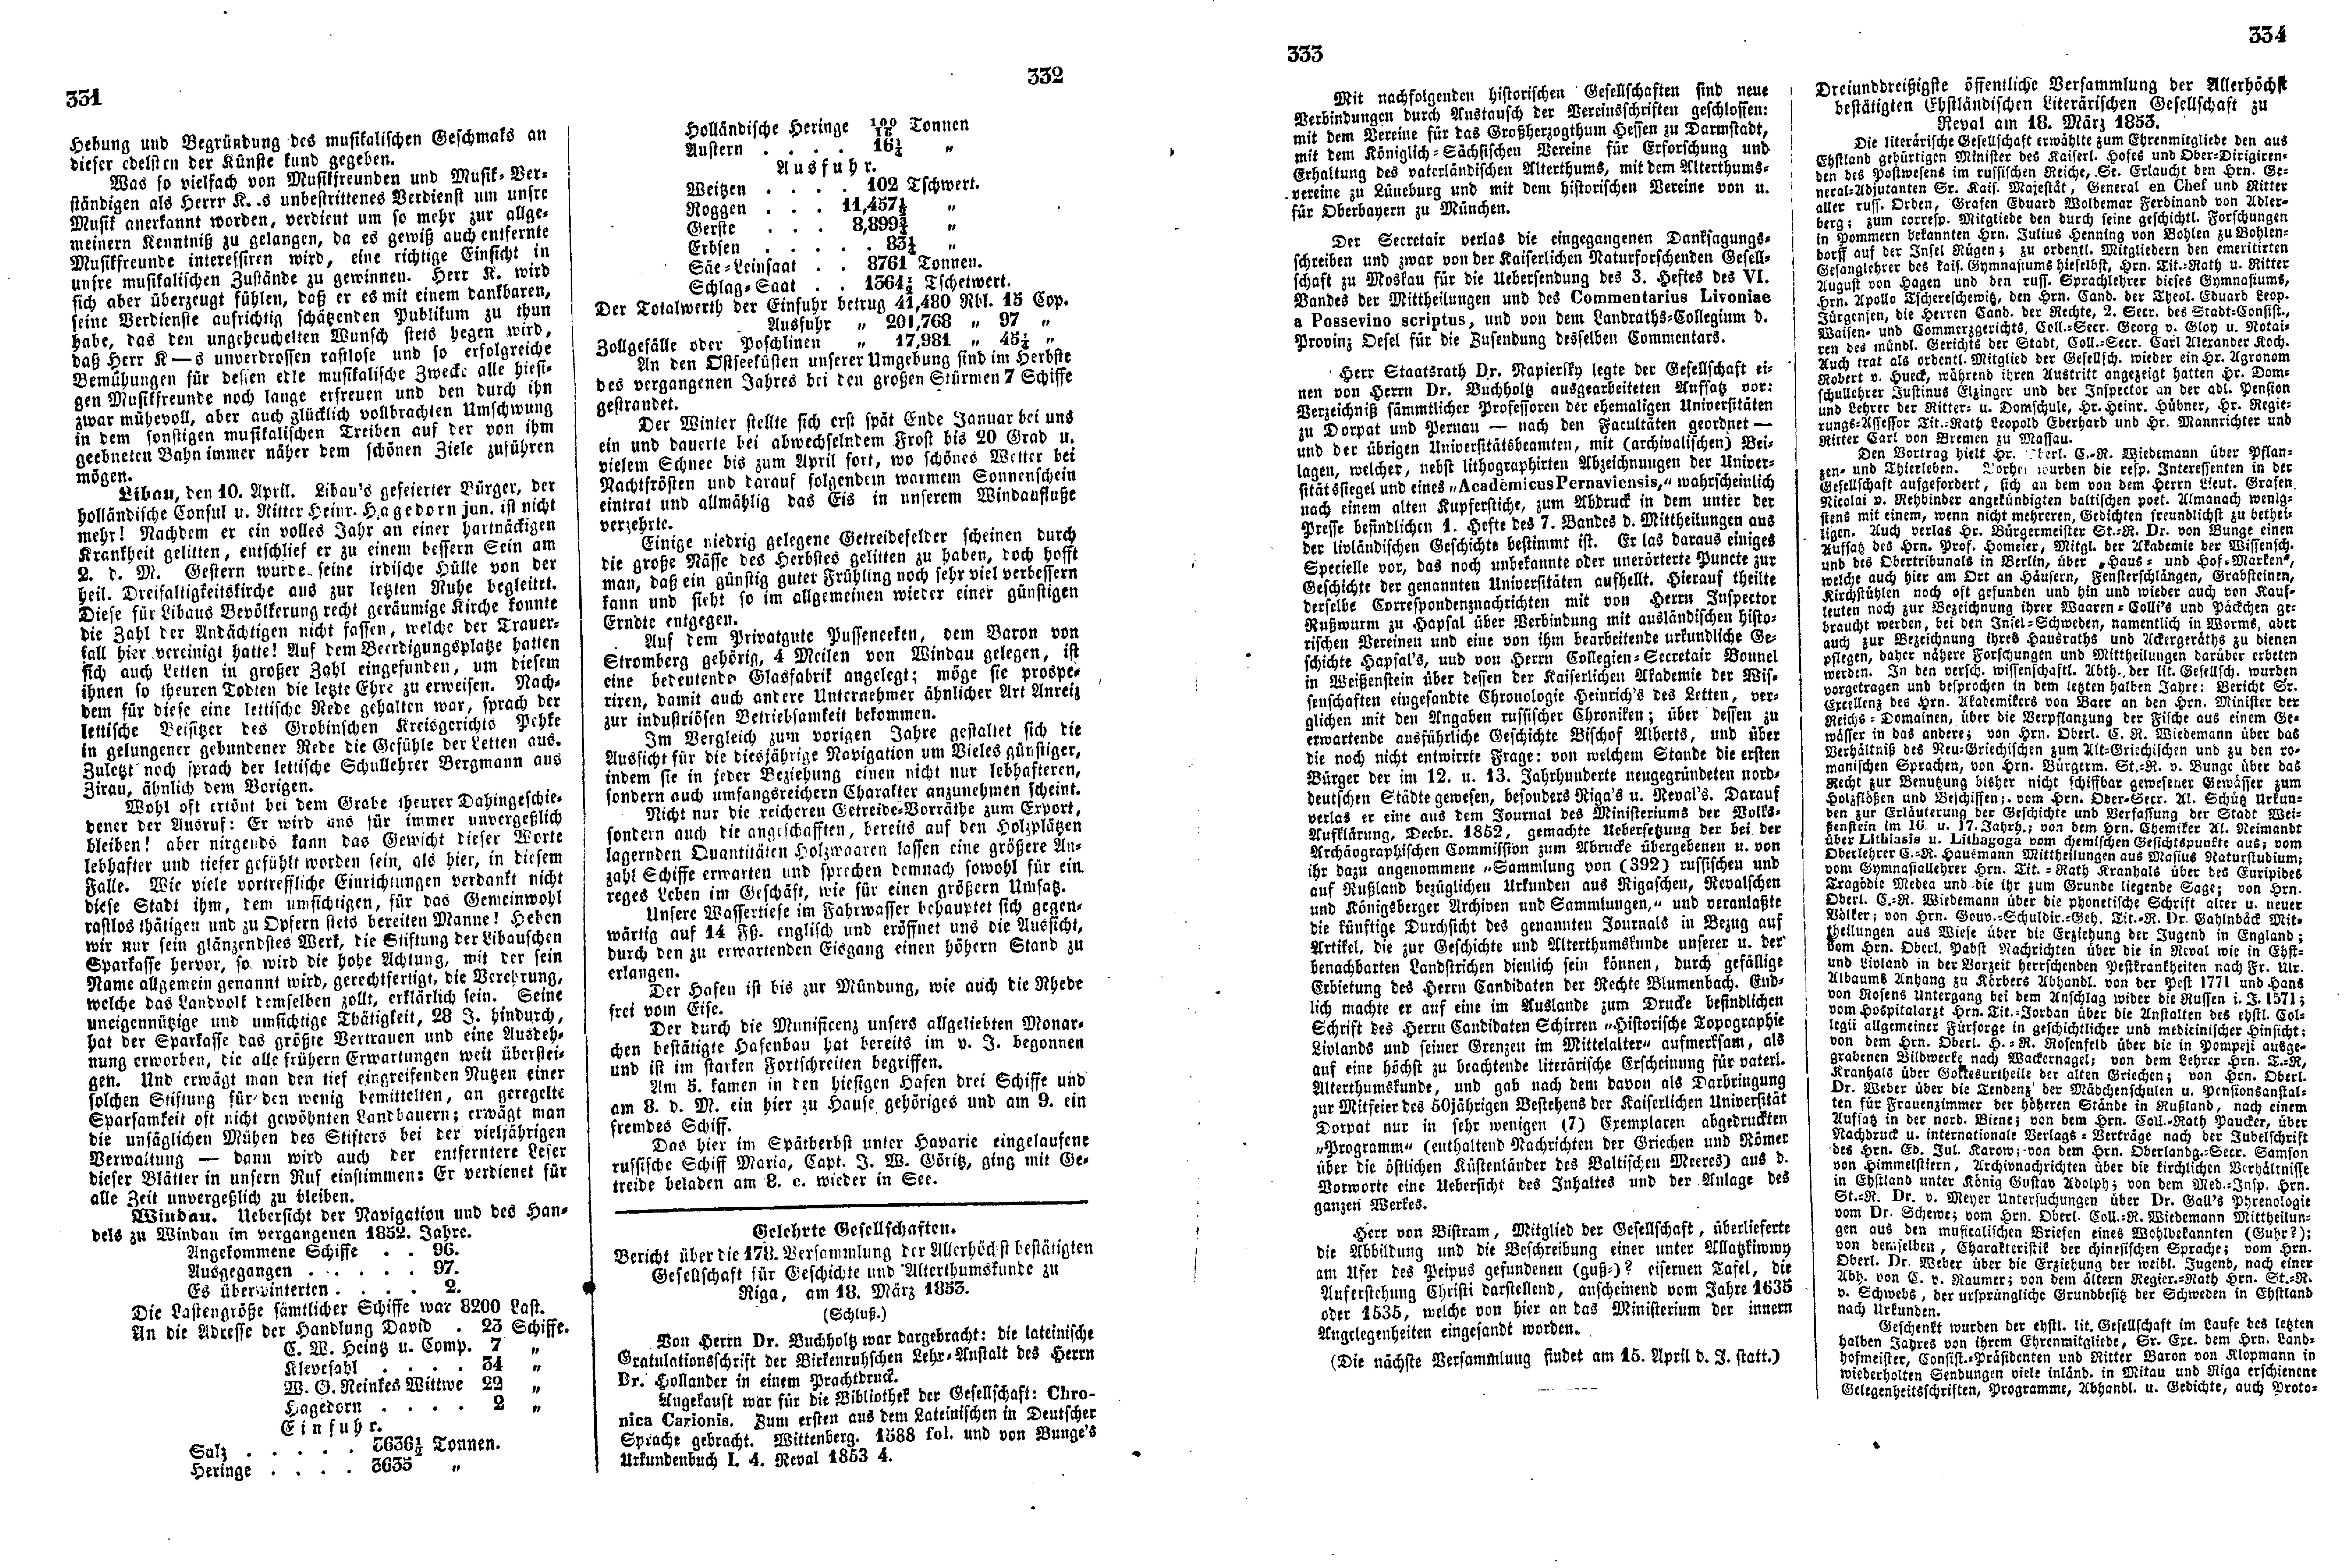 Das Inland [18] (1853) | 93. (331-334) Main body of text